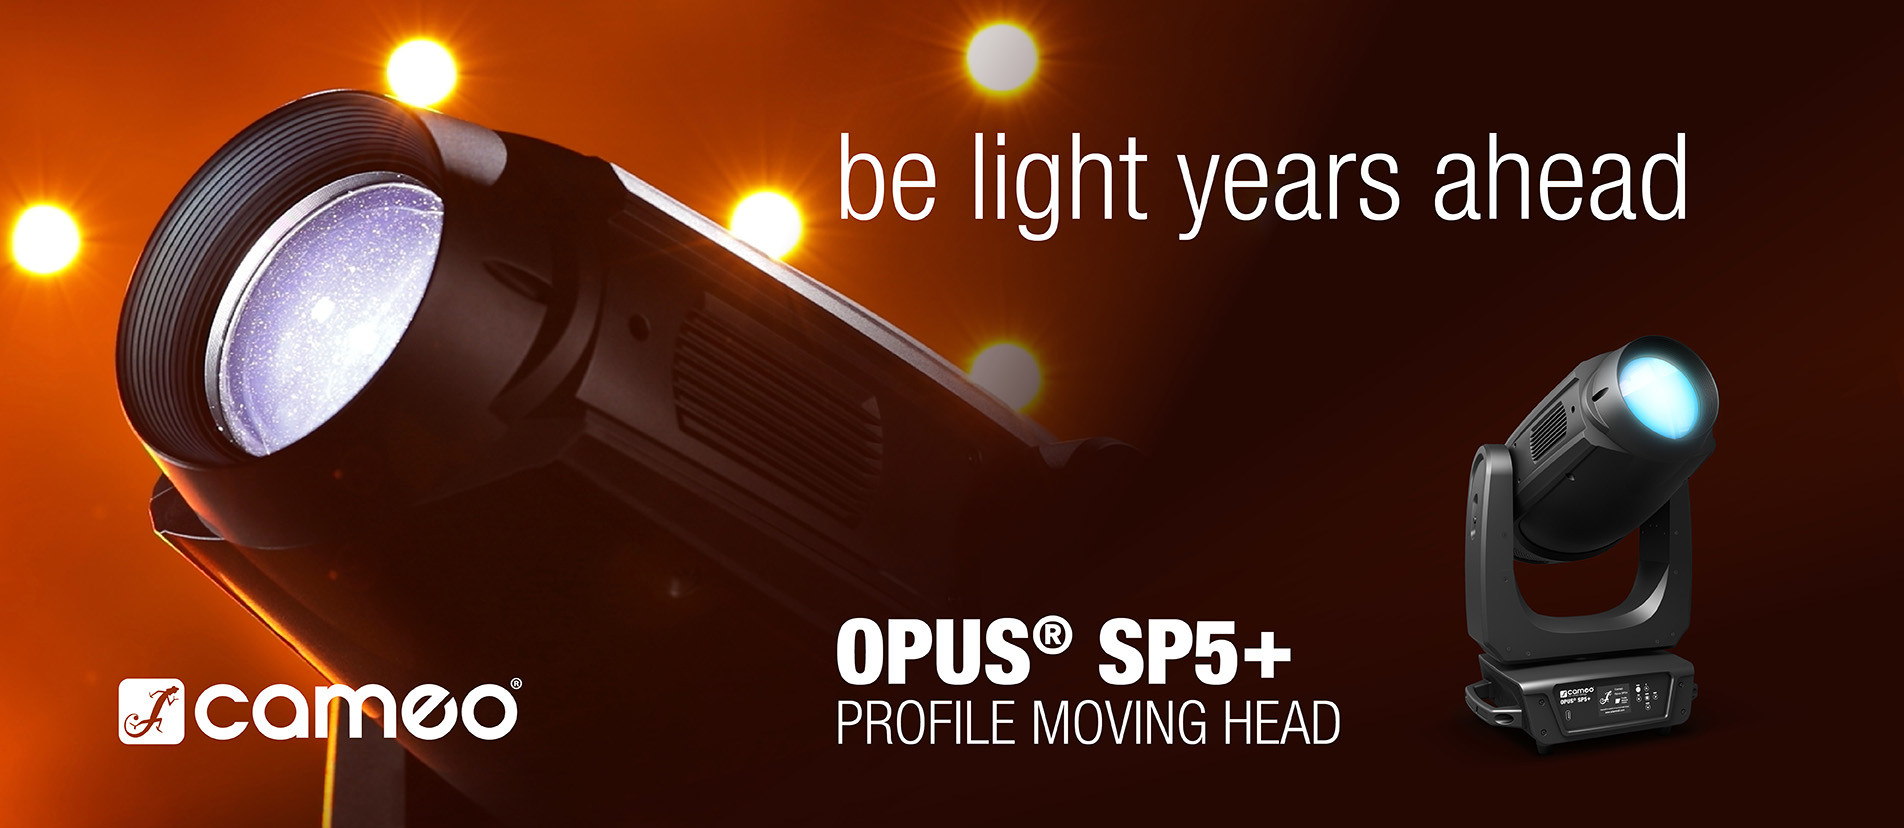 OPUS SP5+